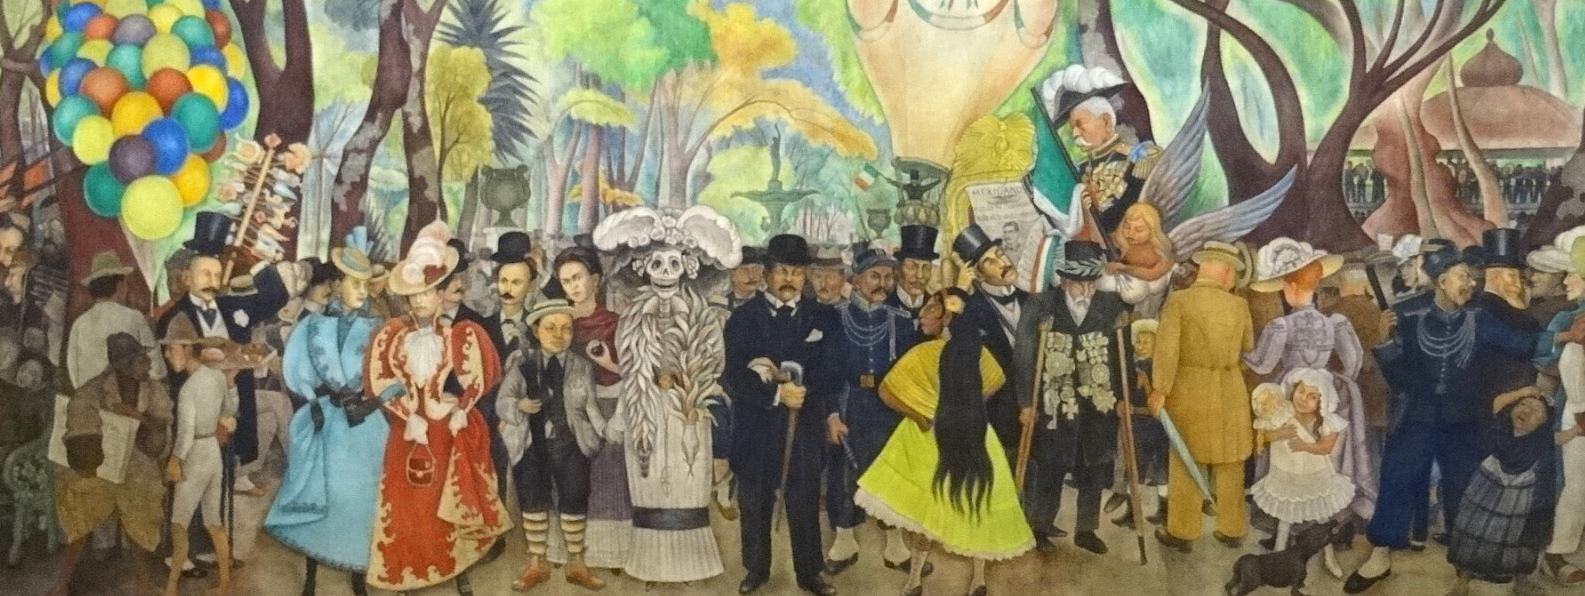 Diego Rivera Mural Museum 